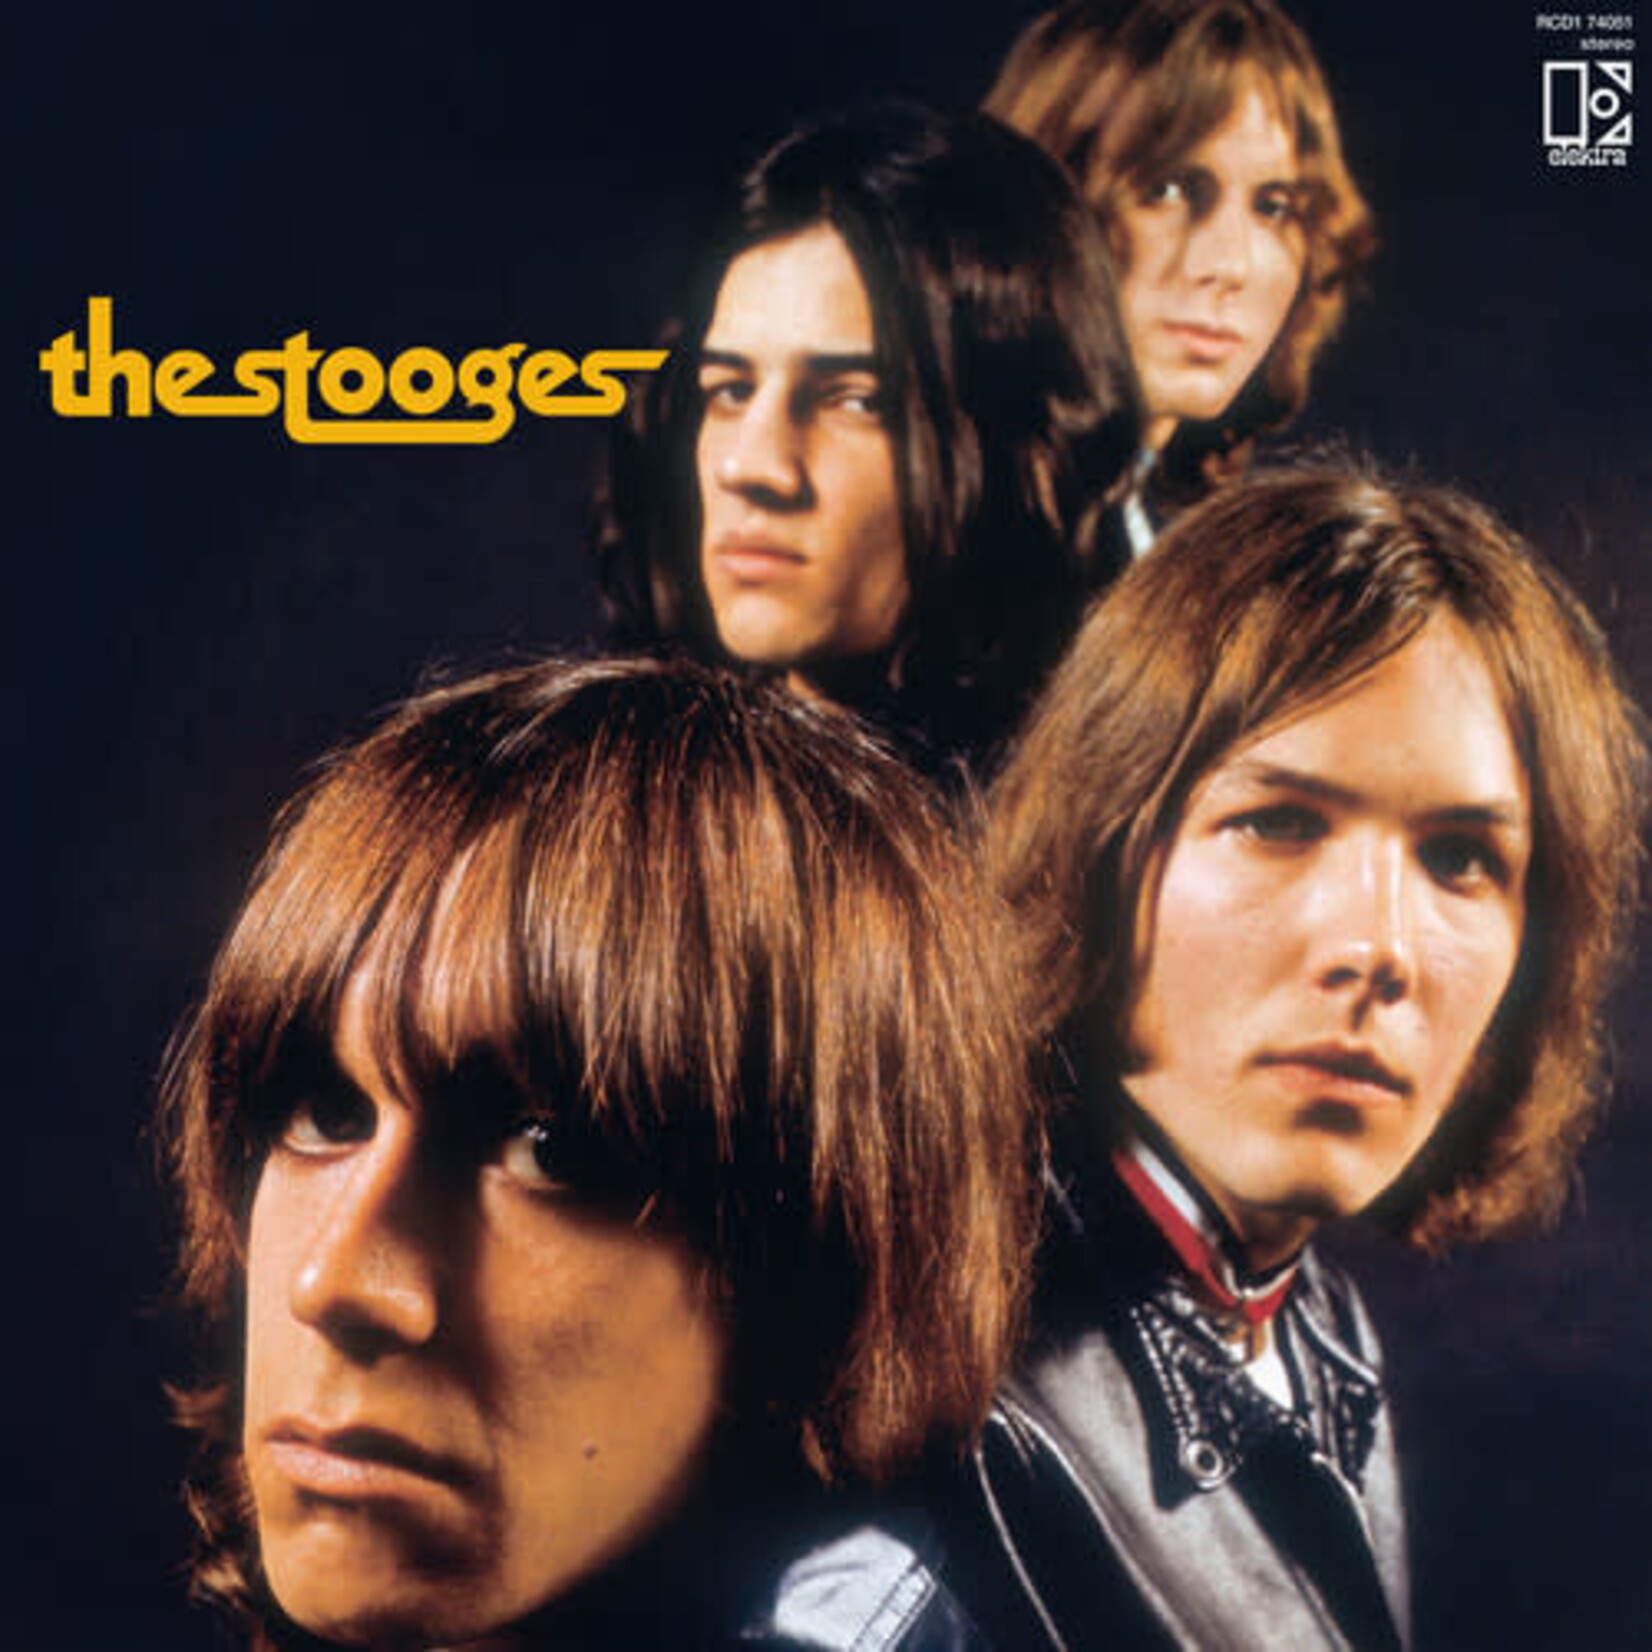 [New] Stooges - The Stooges (whiskey golden brown vinyl, indie exclusive)